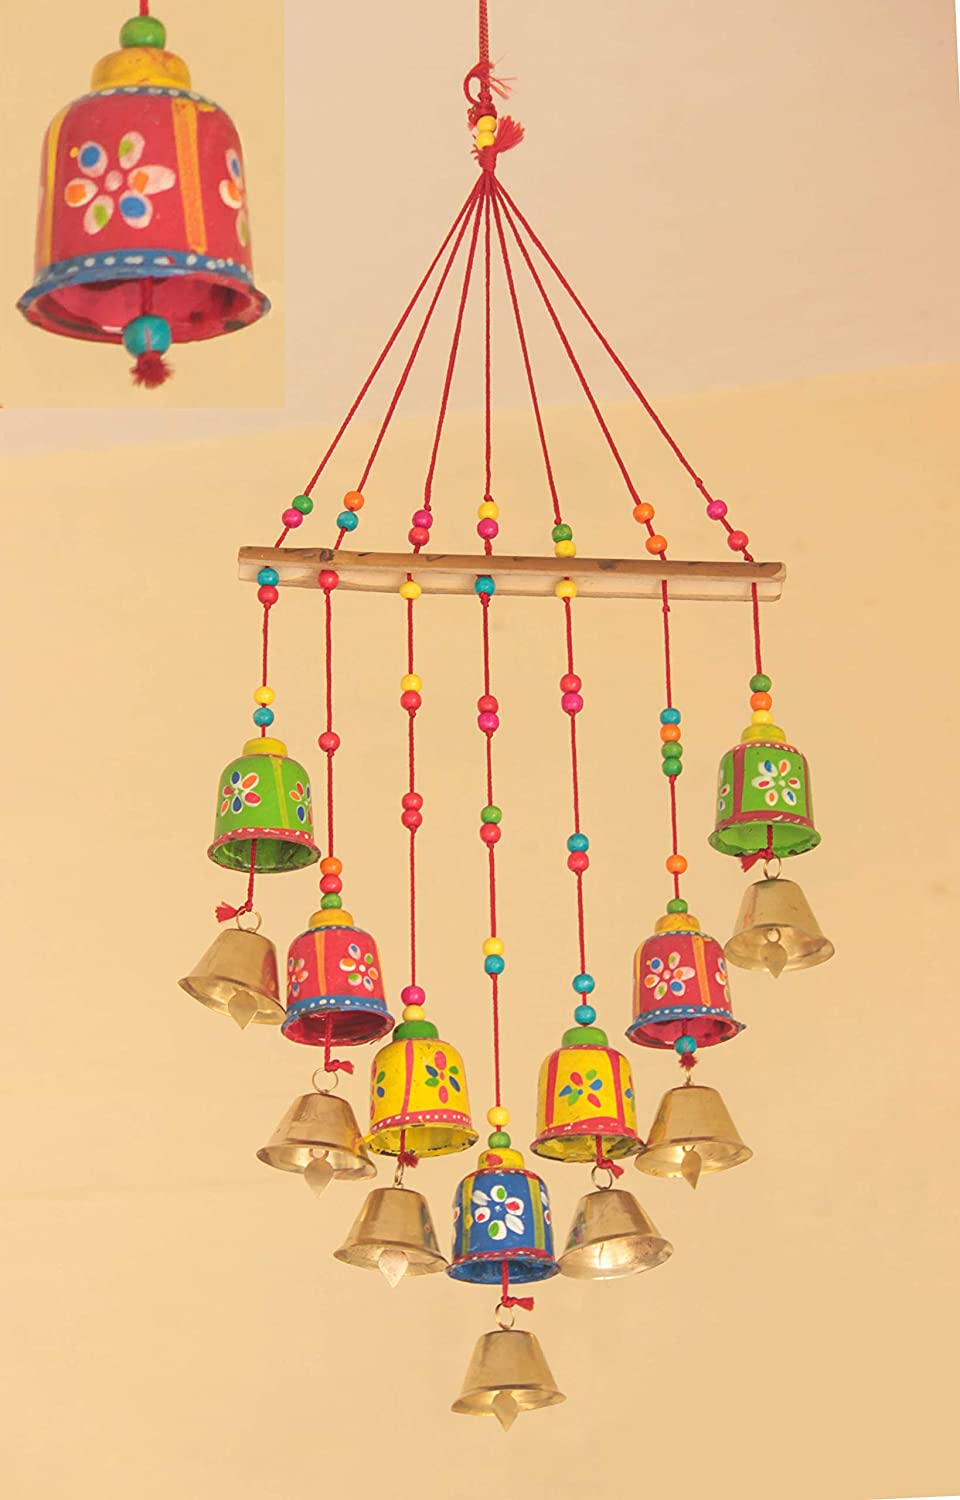 Hanging Bell Toran for home Decor / Decoration bell Toran Set / 